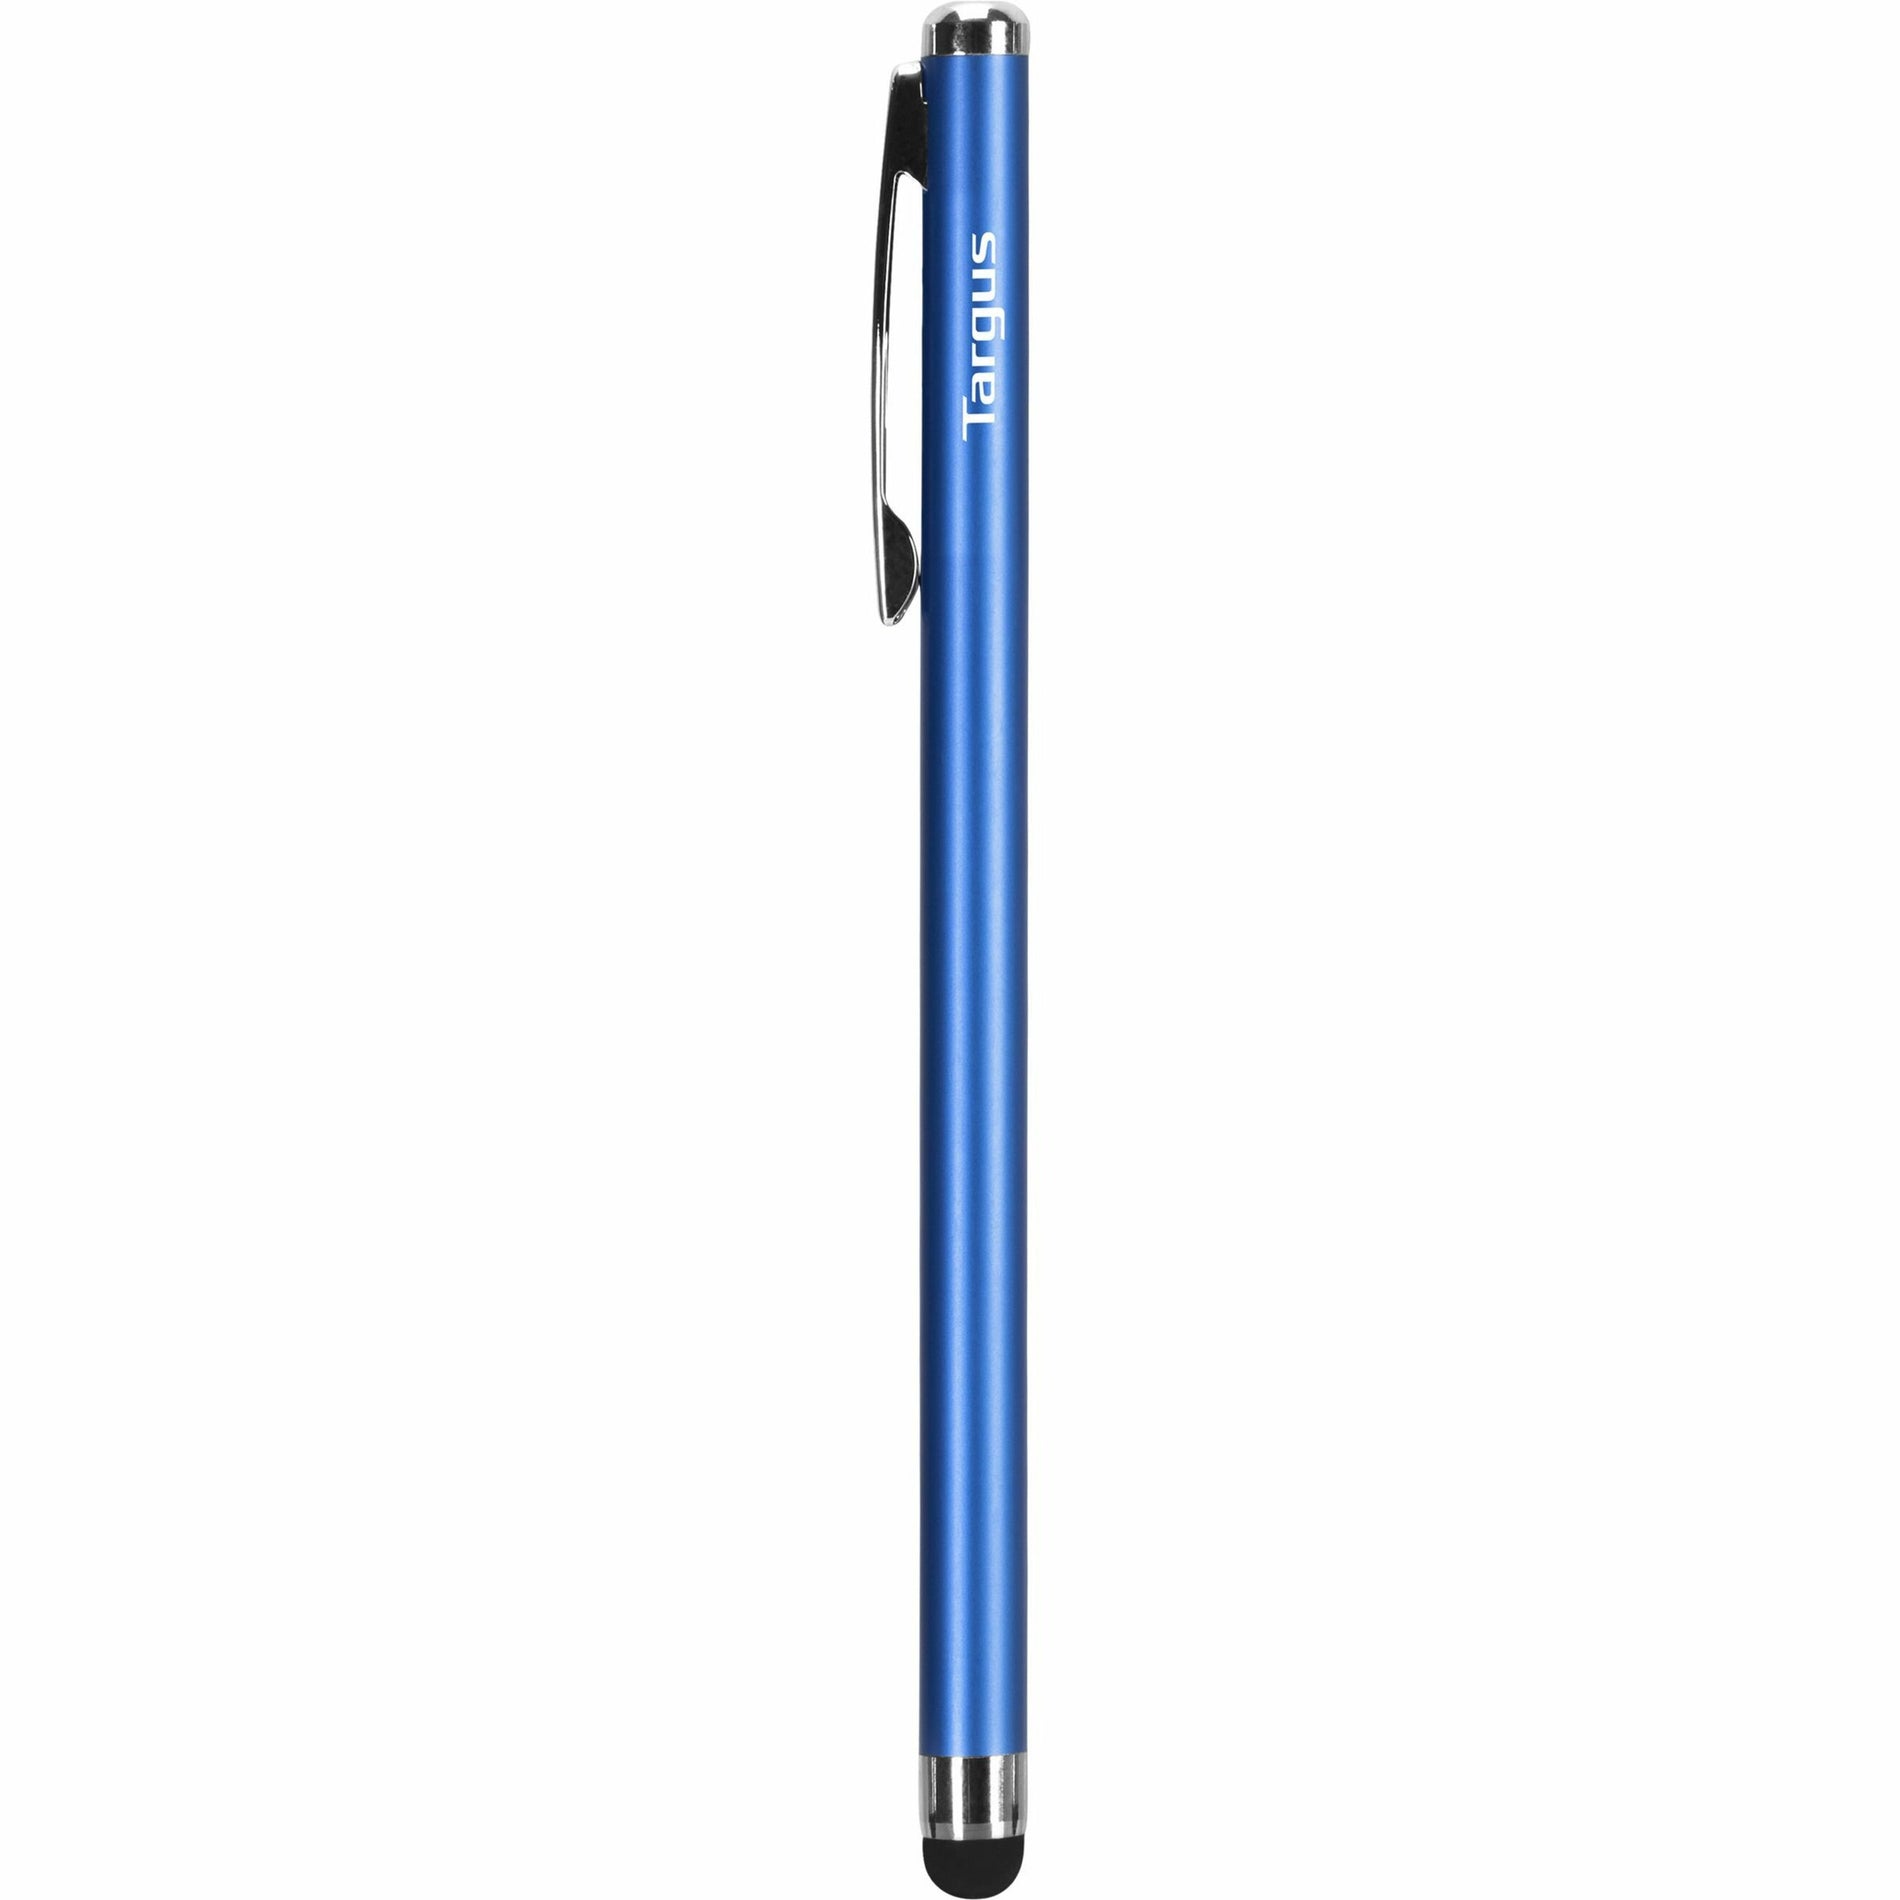 Targus AMM1203US Slim Stylus Pen for Smartphones, Metallic Blue, 1 Year Warranty